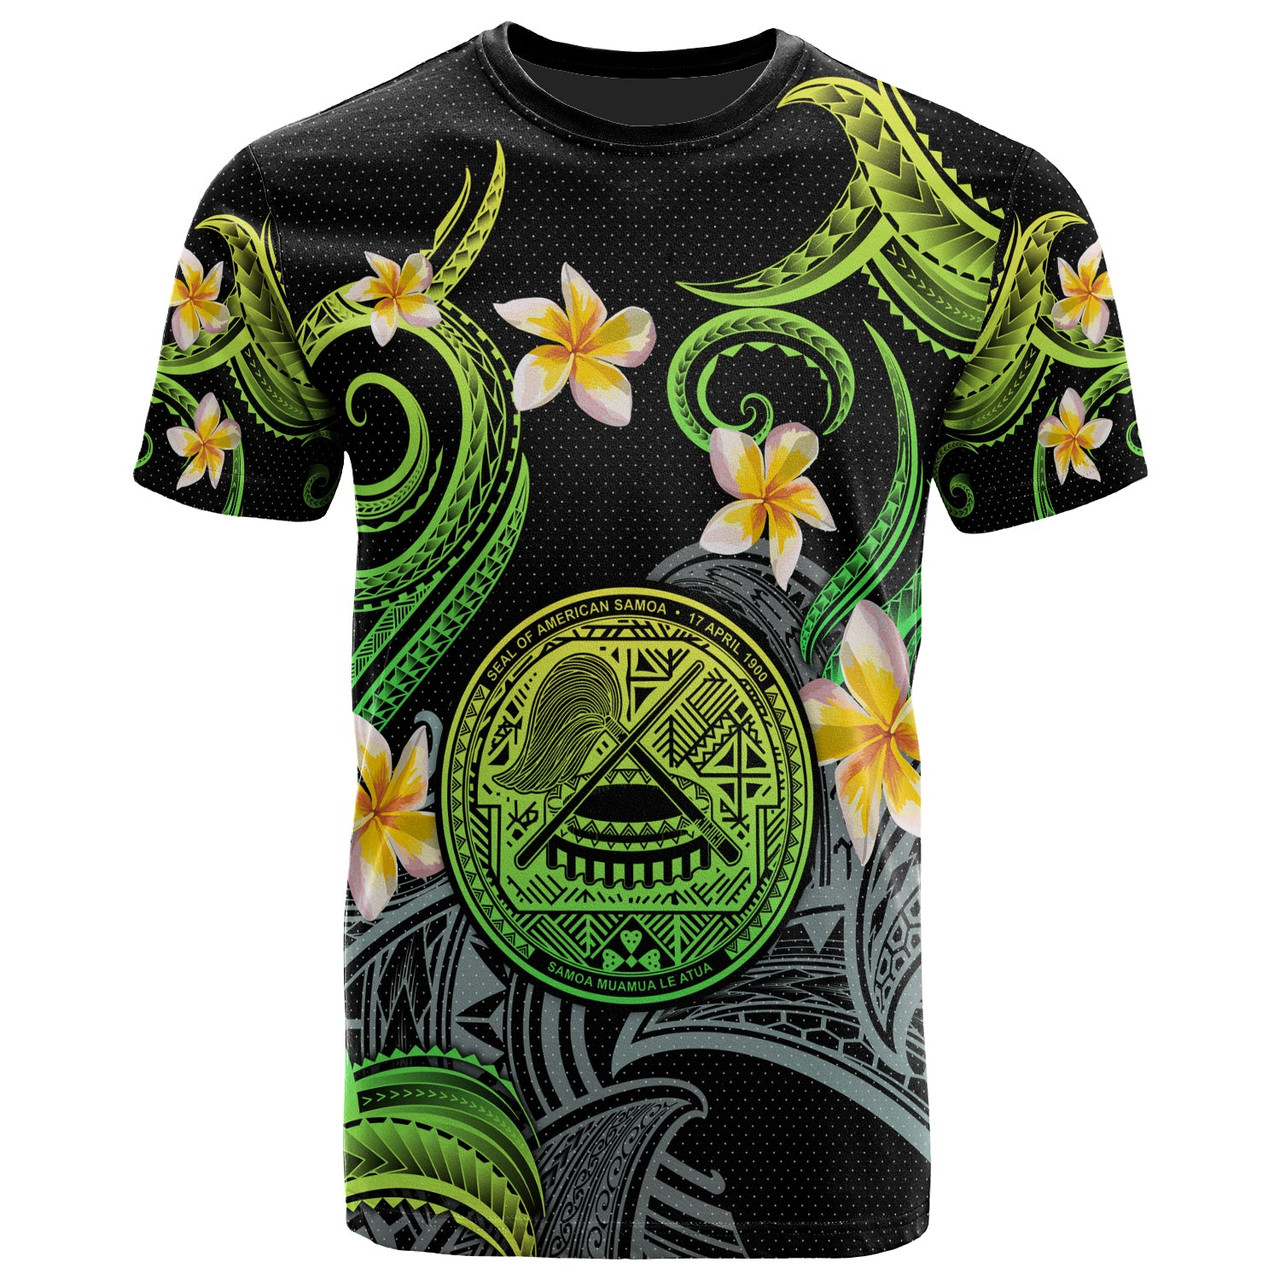 American Samoa T-shirt - Custom Personalised Polynesian Waves with Plumeria Flowers (Green)